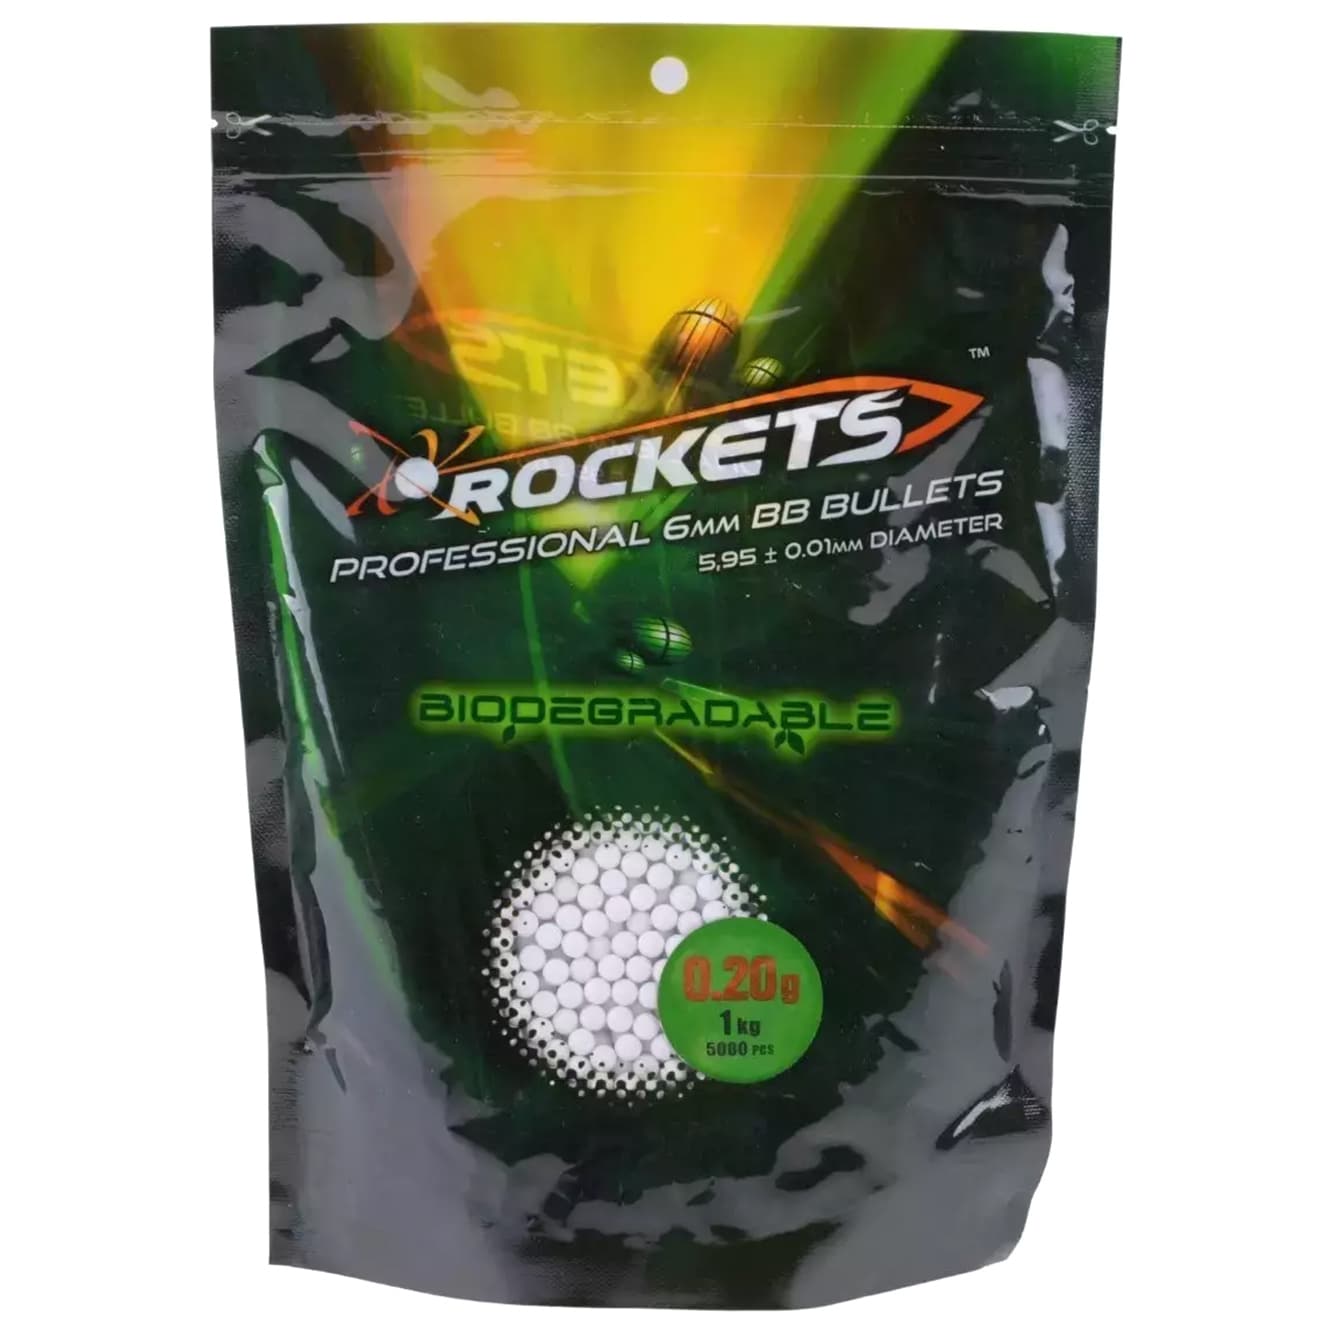 Kulki ASG Rockets Professional biodegradowalne 0,20g - 1kg - Białe